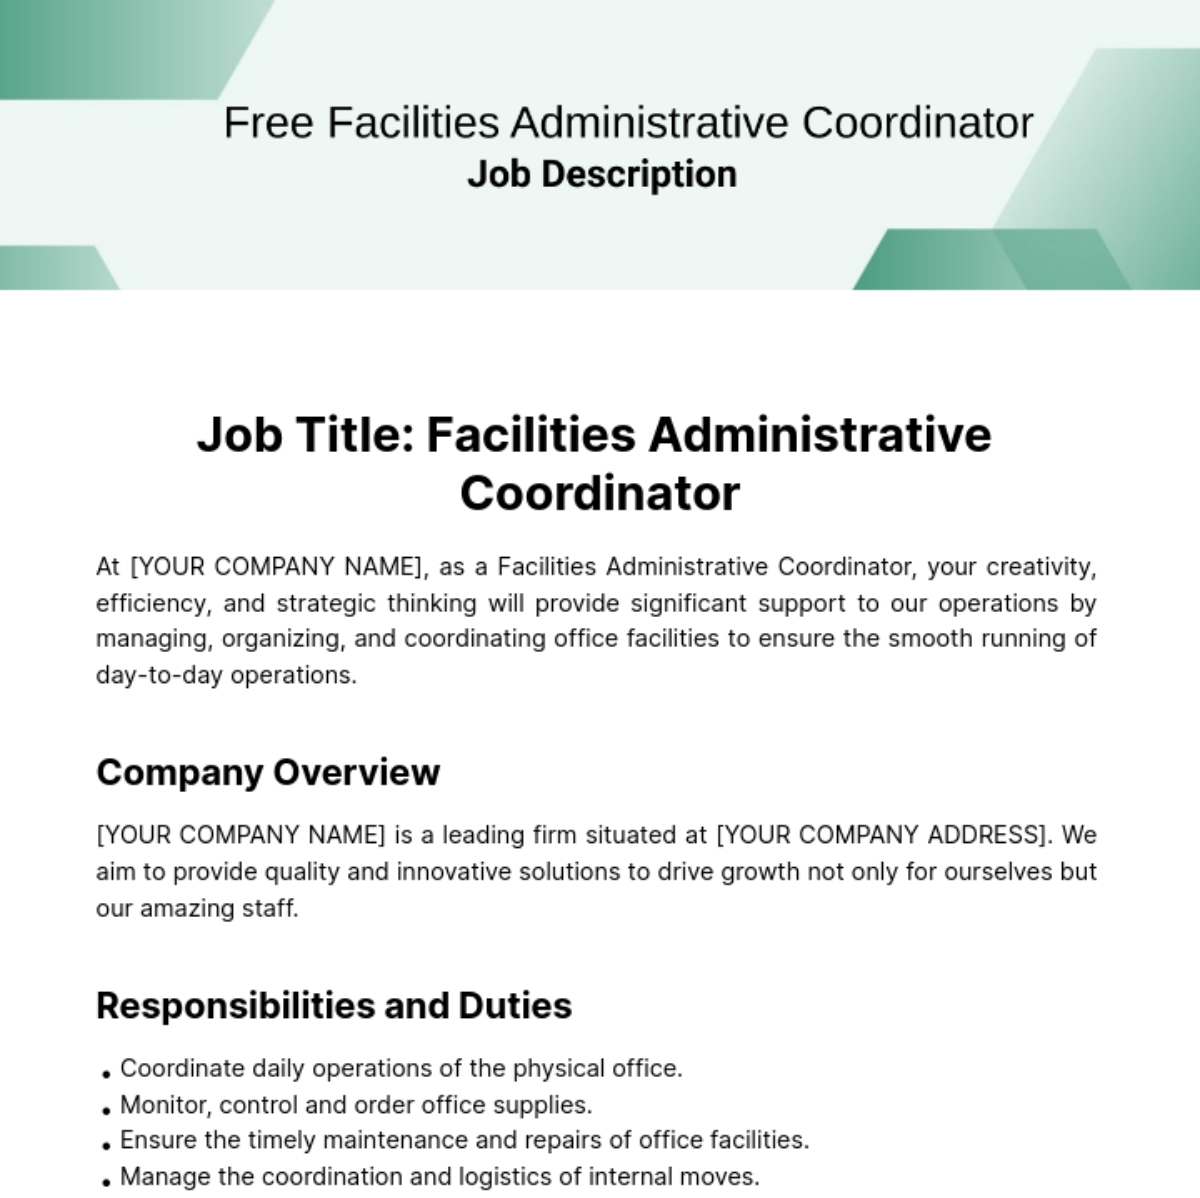 Free Facilities Administrative Coordinator Job Description Template